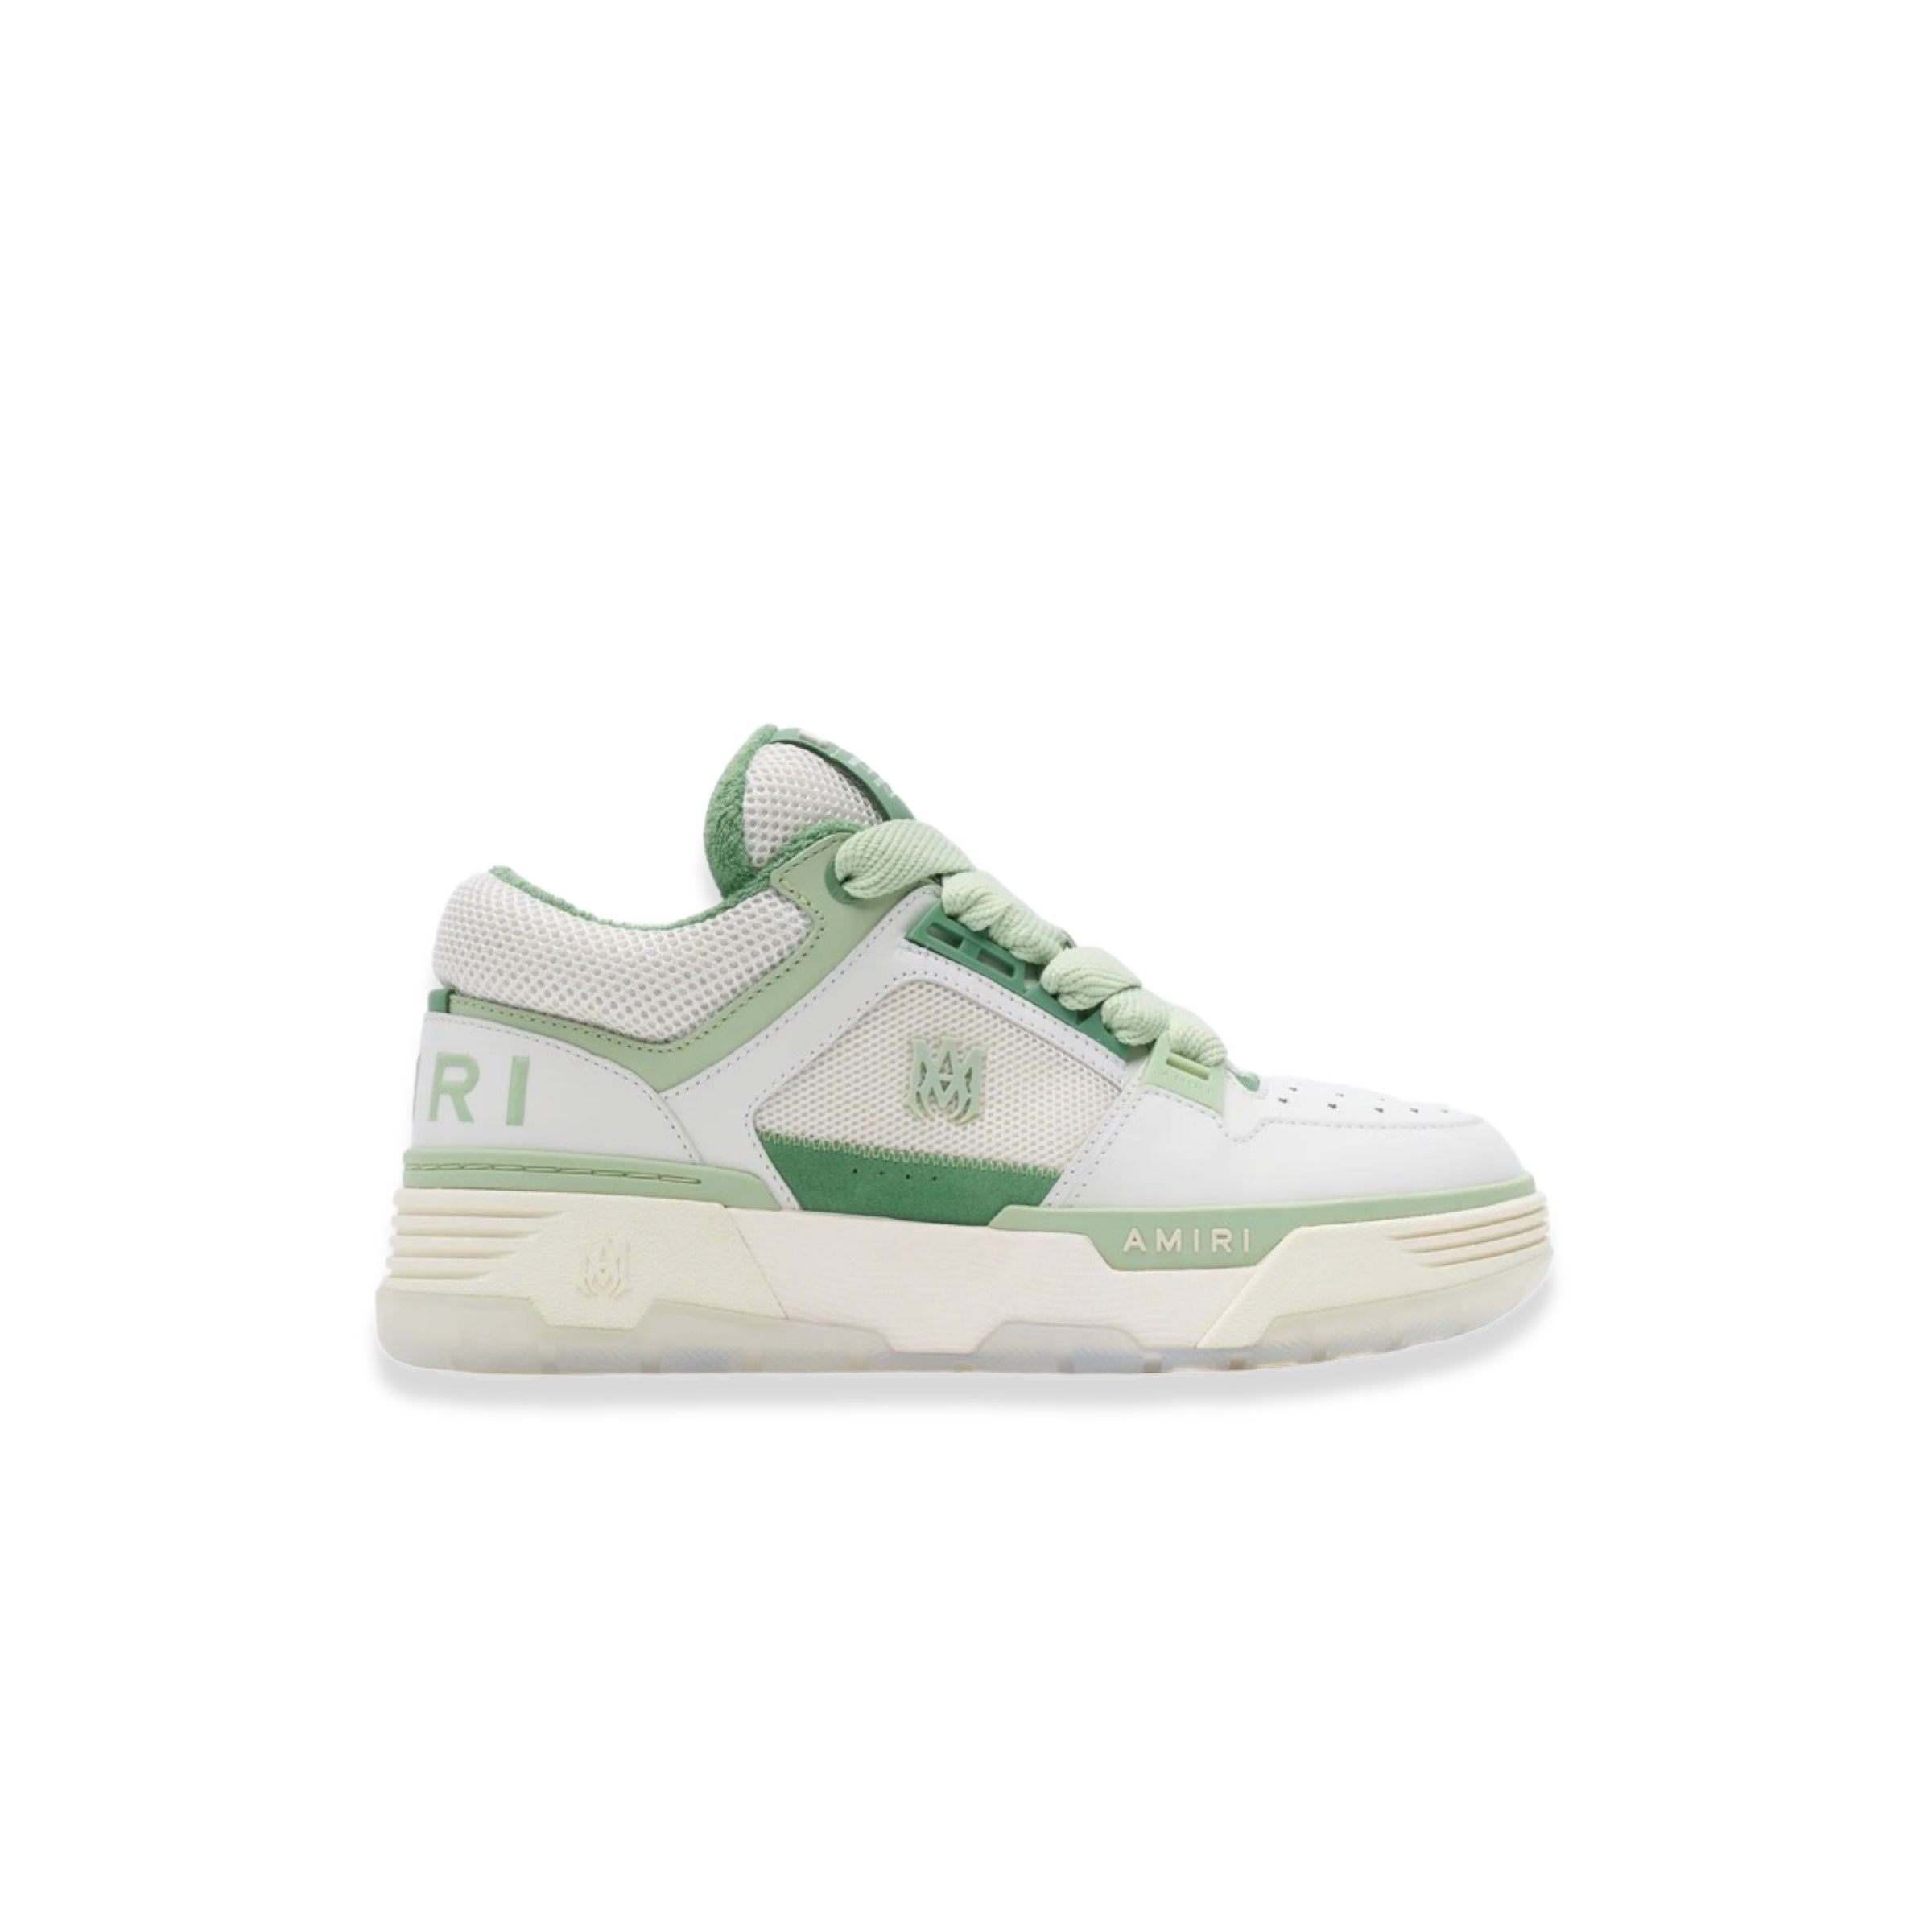 Amiri - MA1 Sneakers White Light Green